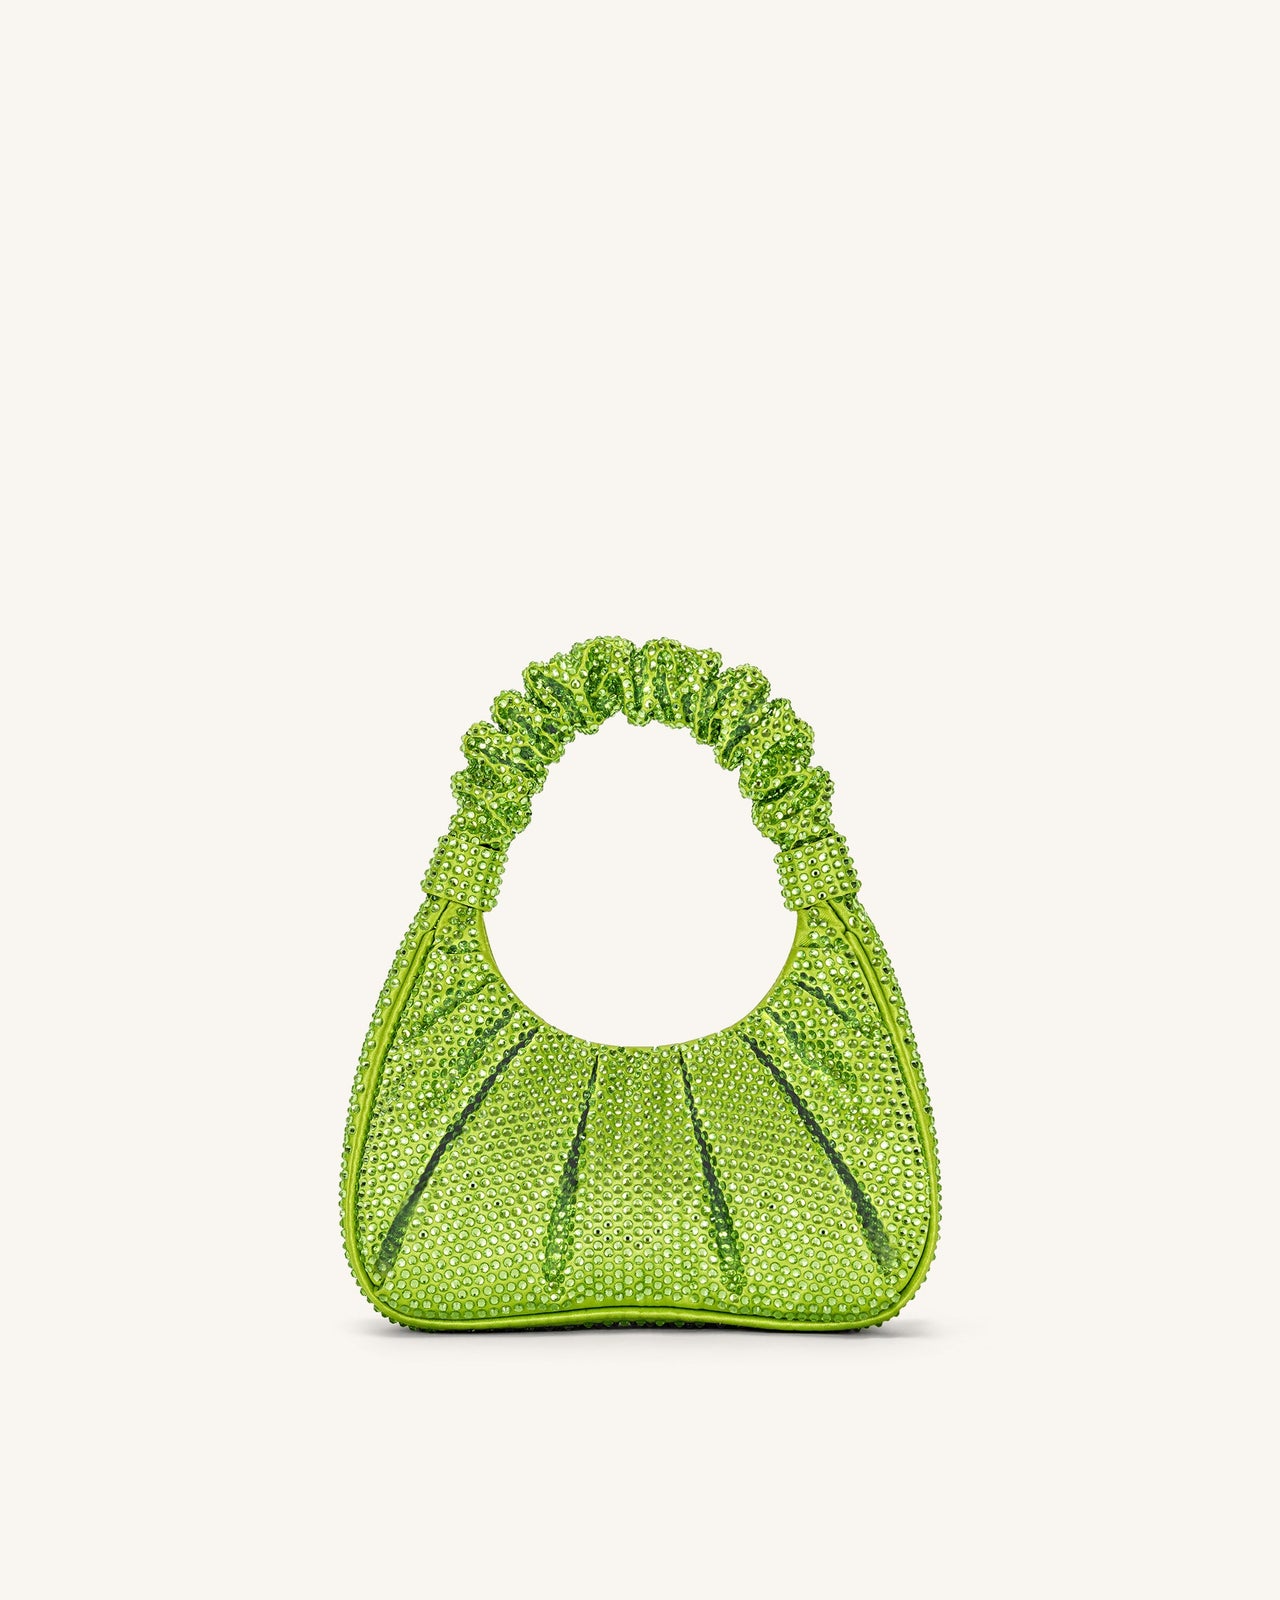 JW PEI Women's Abacus Mini Top Handle Bag - Acid Green: Handbags